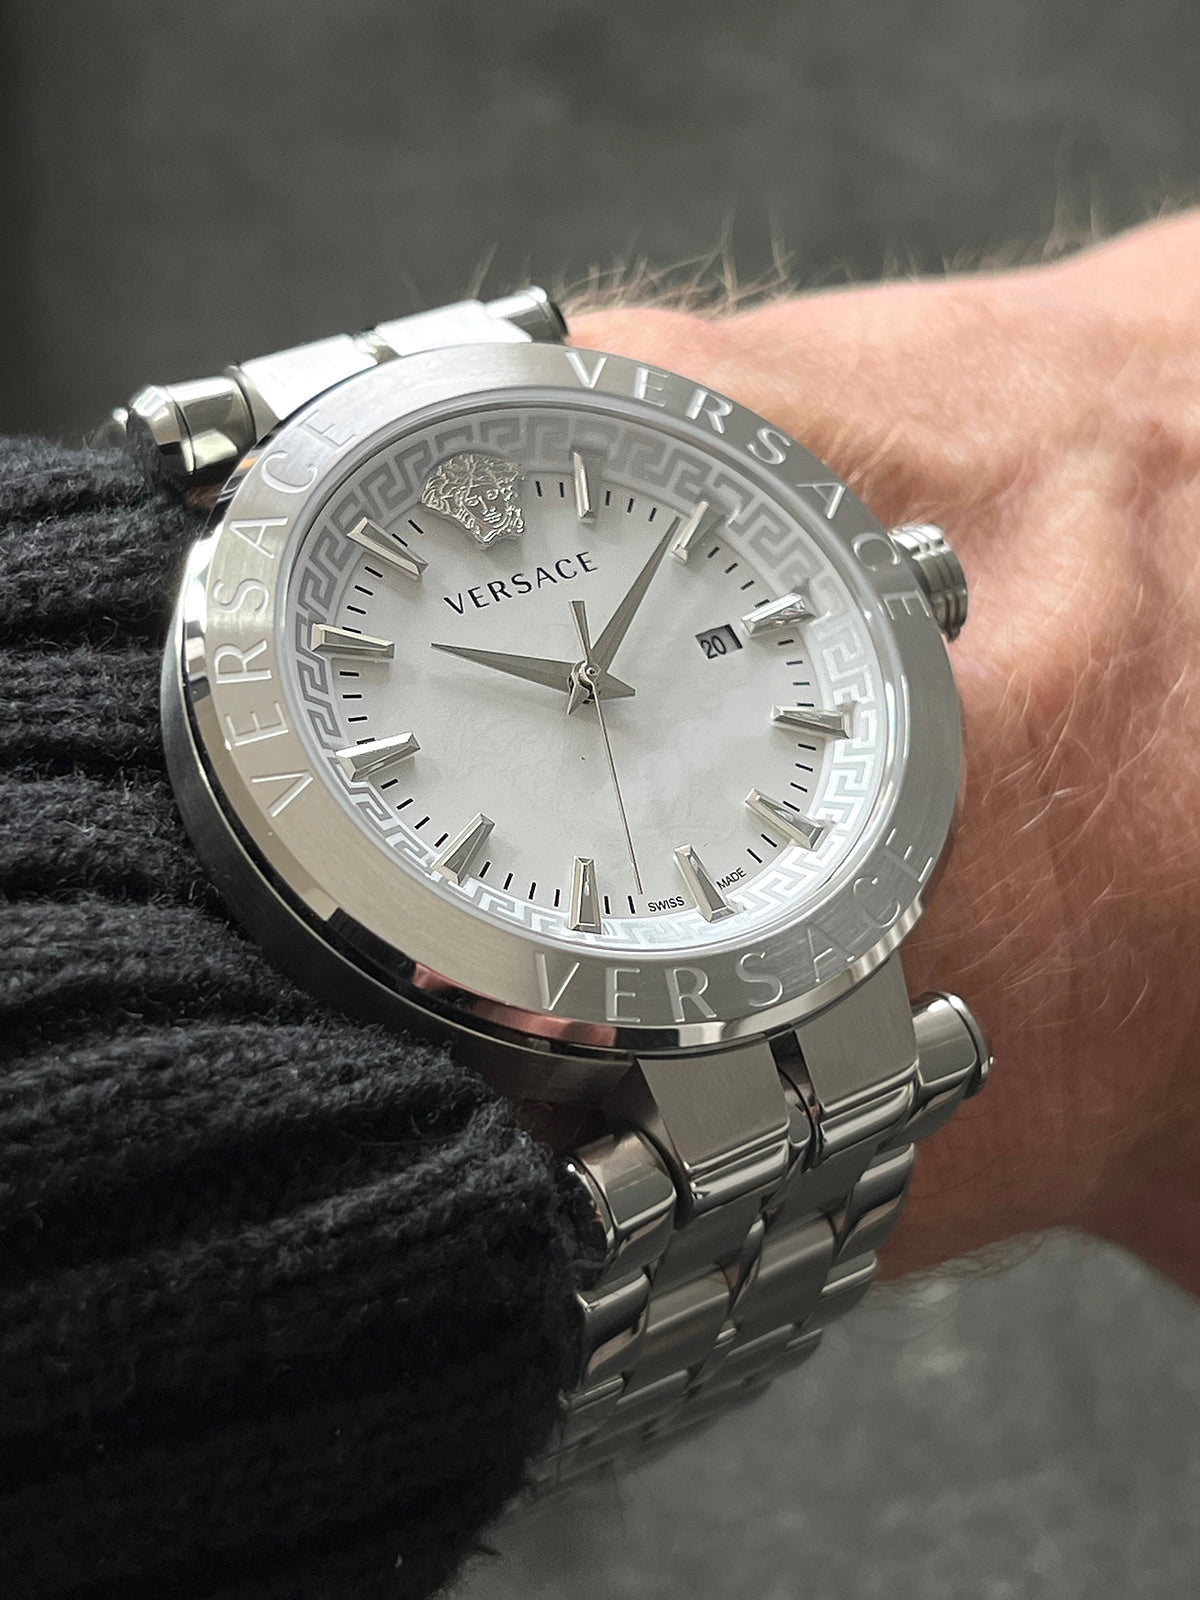 Versace Men's Watch Aion 44mm White Silver VE2G00321